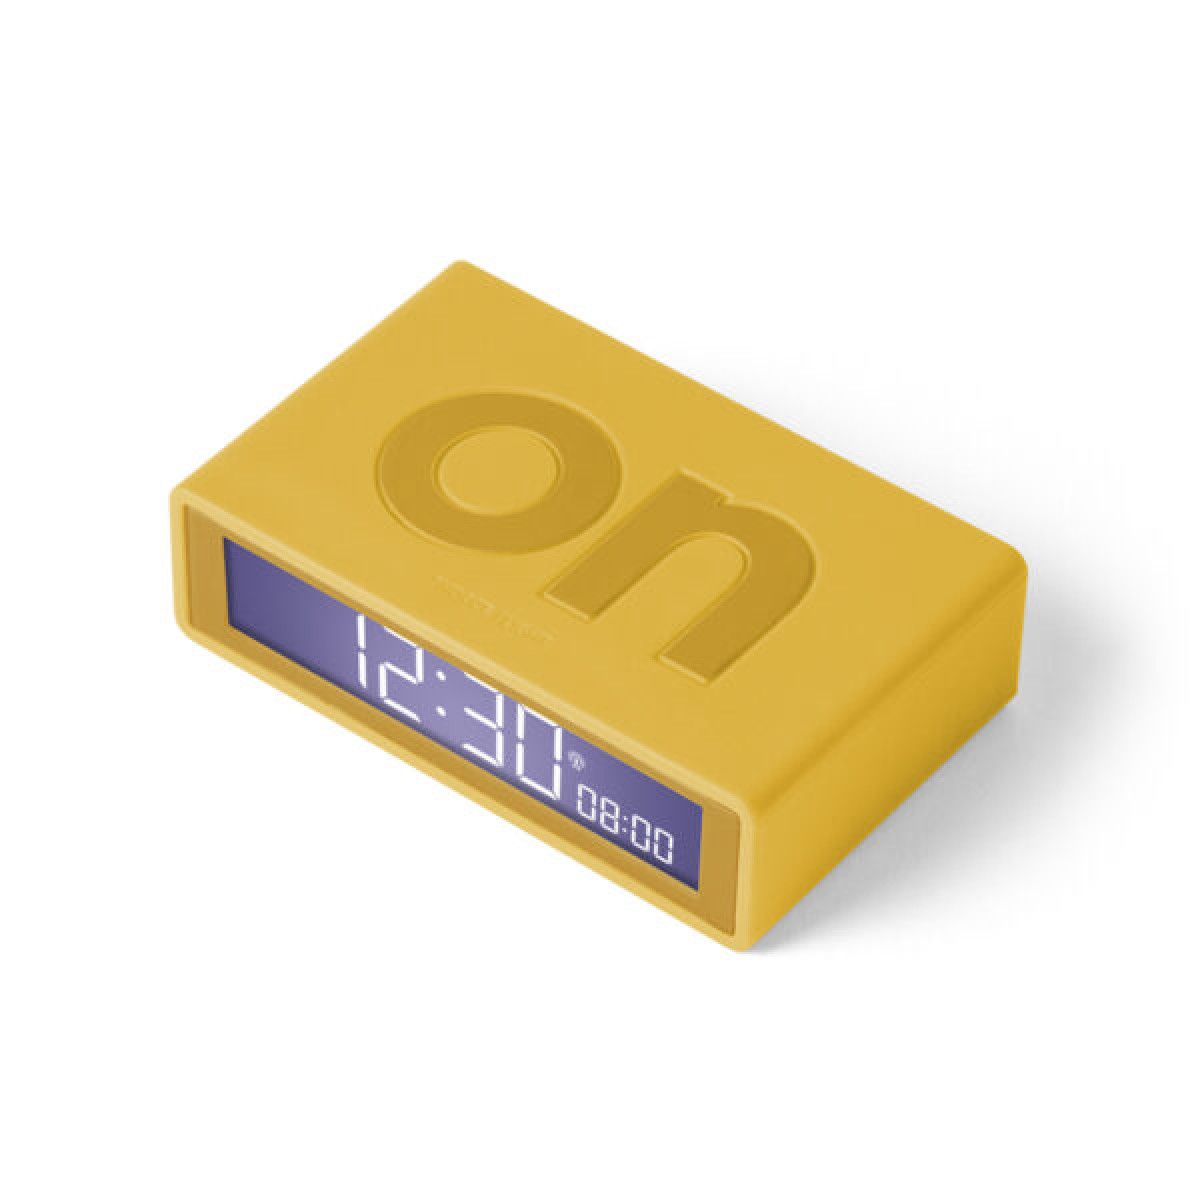 Lexon - Flip - Sveglia LCD reversibile - Rubber Yellow